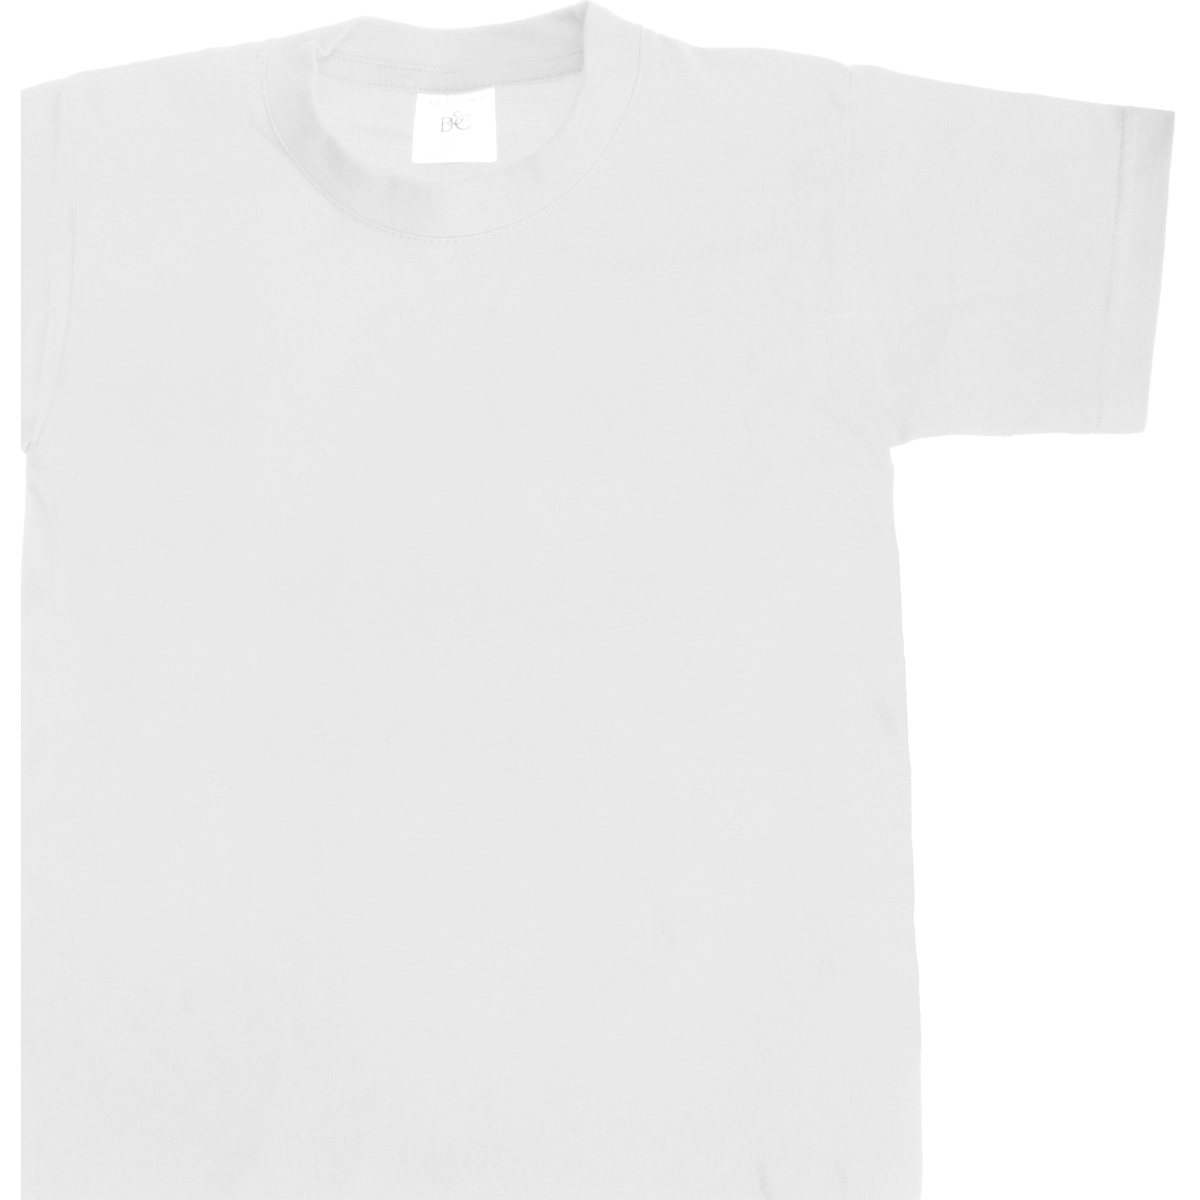 2,25€/Stk SONDERPREIS!! 3x10 St B&C T-Shirt Exact 190 weiss 